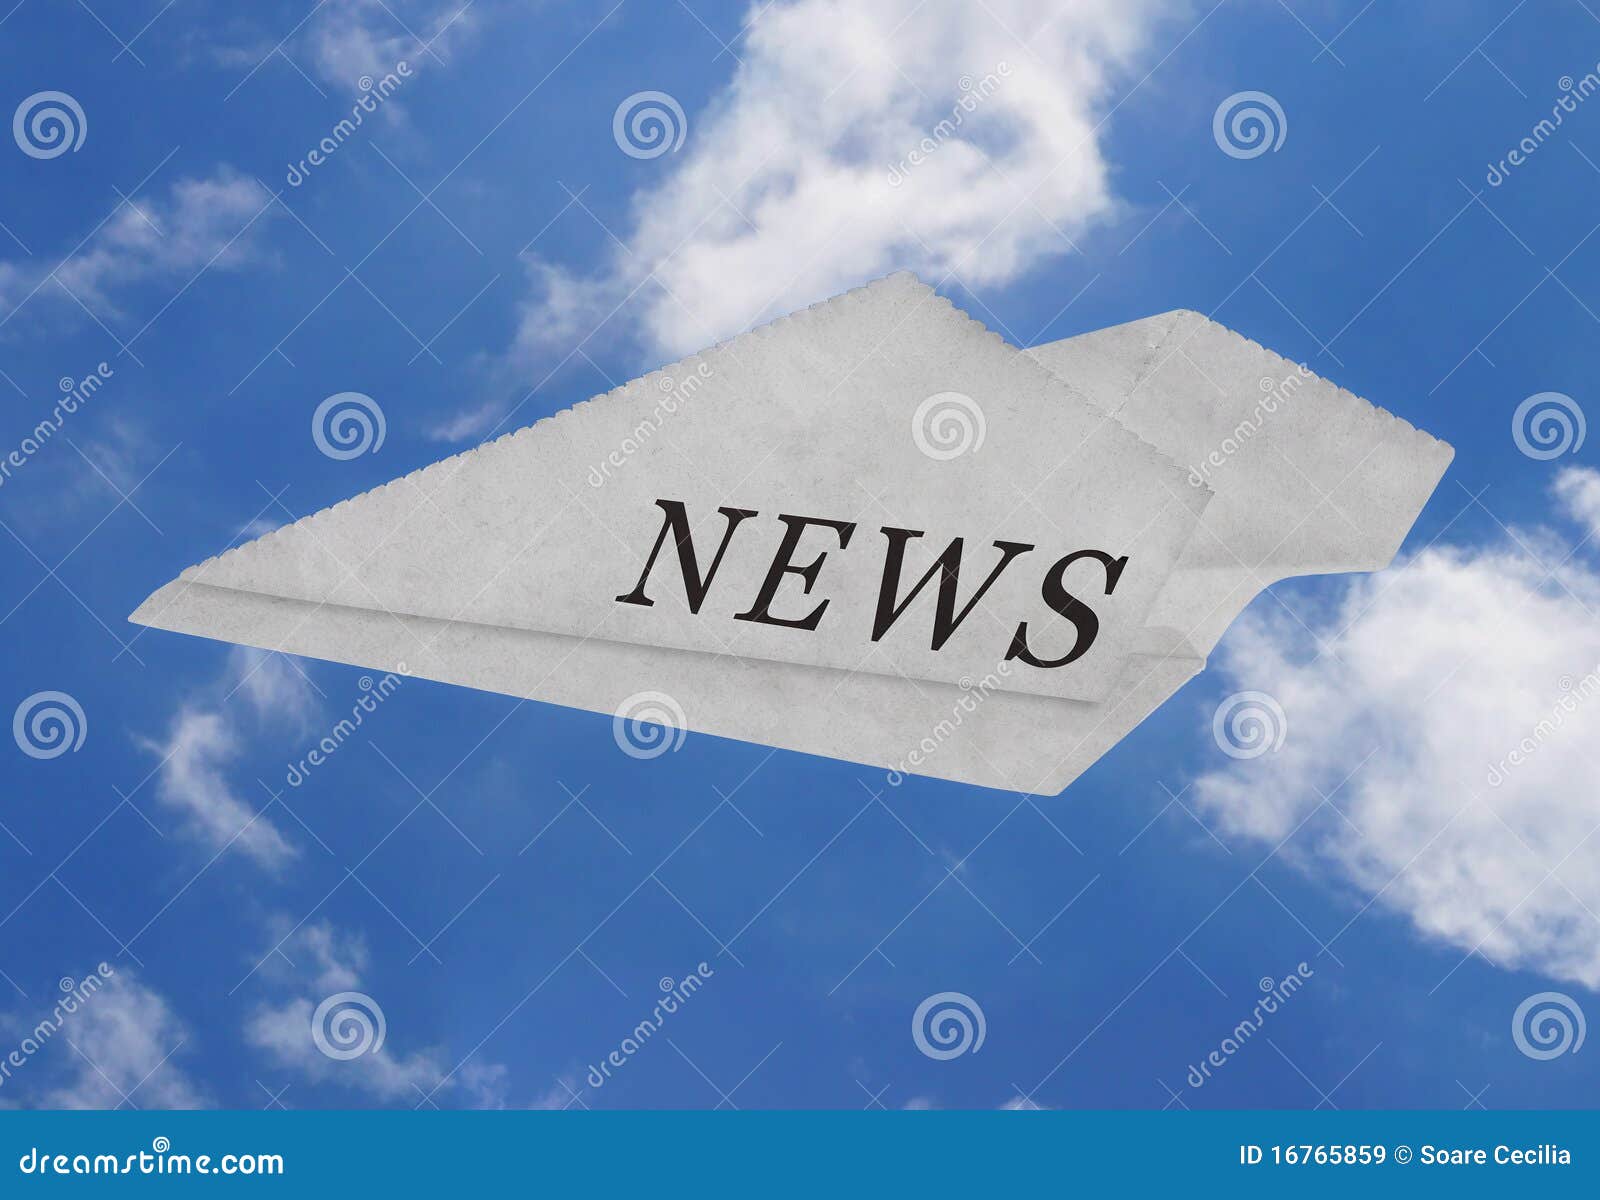 news, hot news, fast arriving - newspaper plane